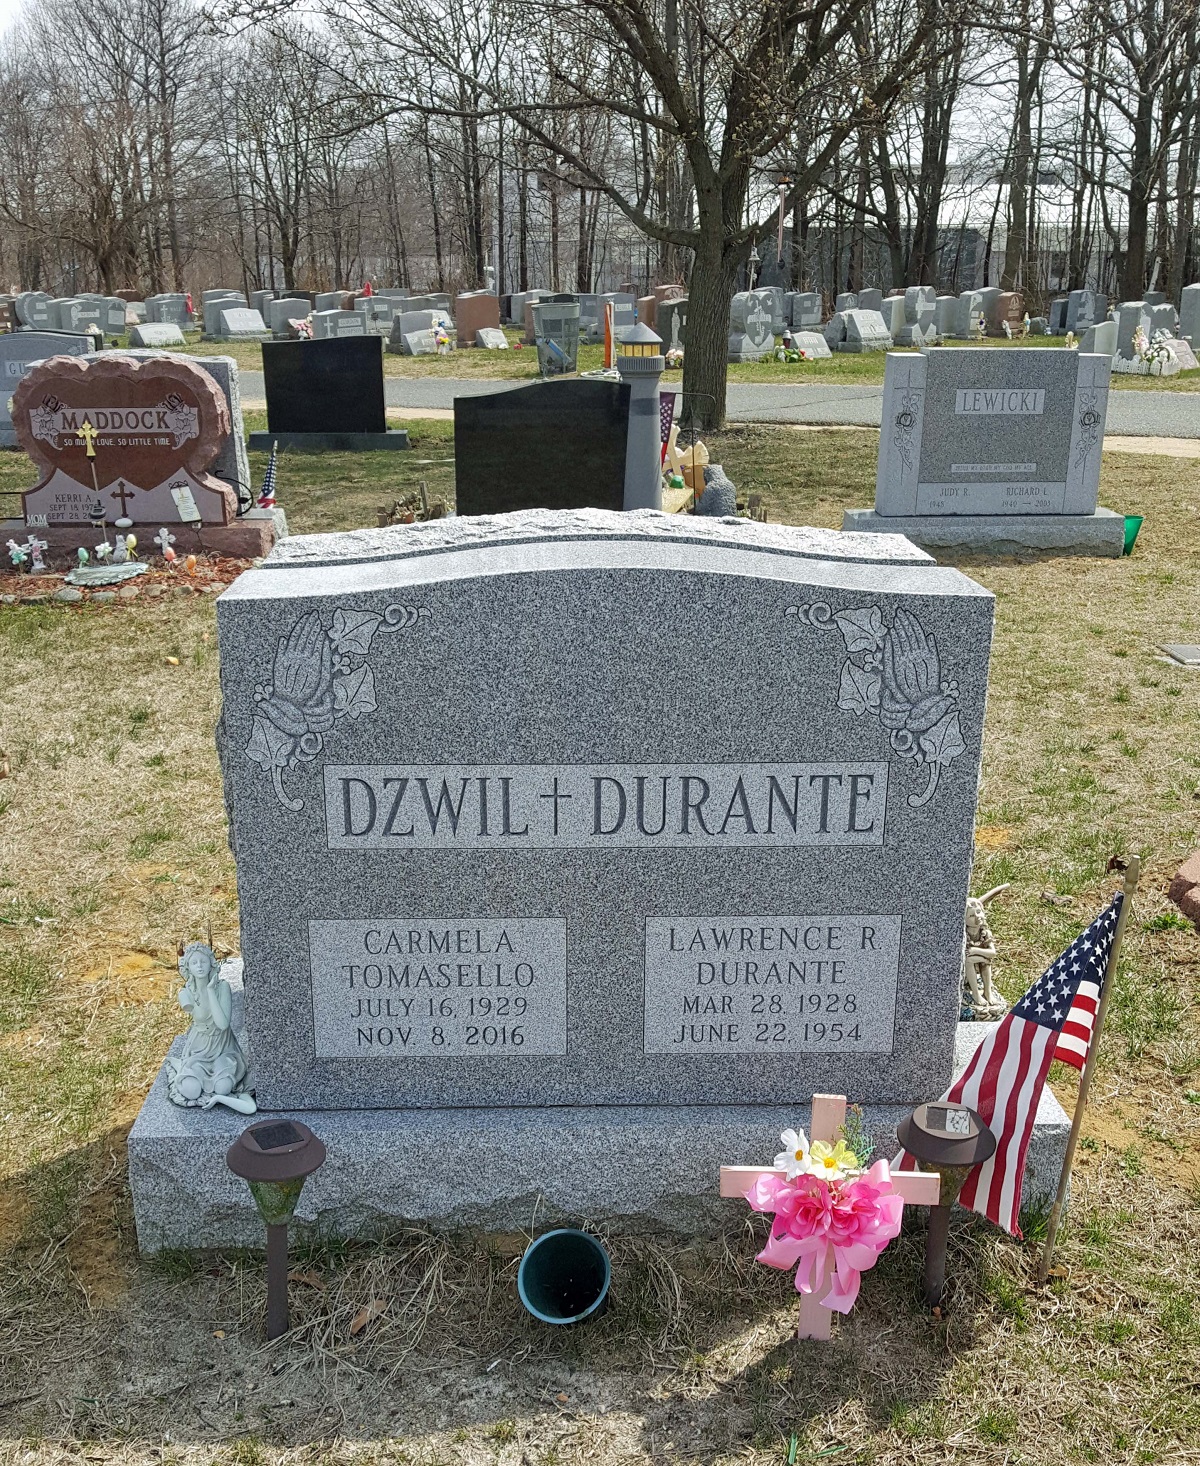 Dzwil-Durante Grave in St. Joseph's Cemetery